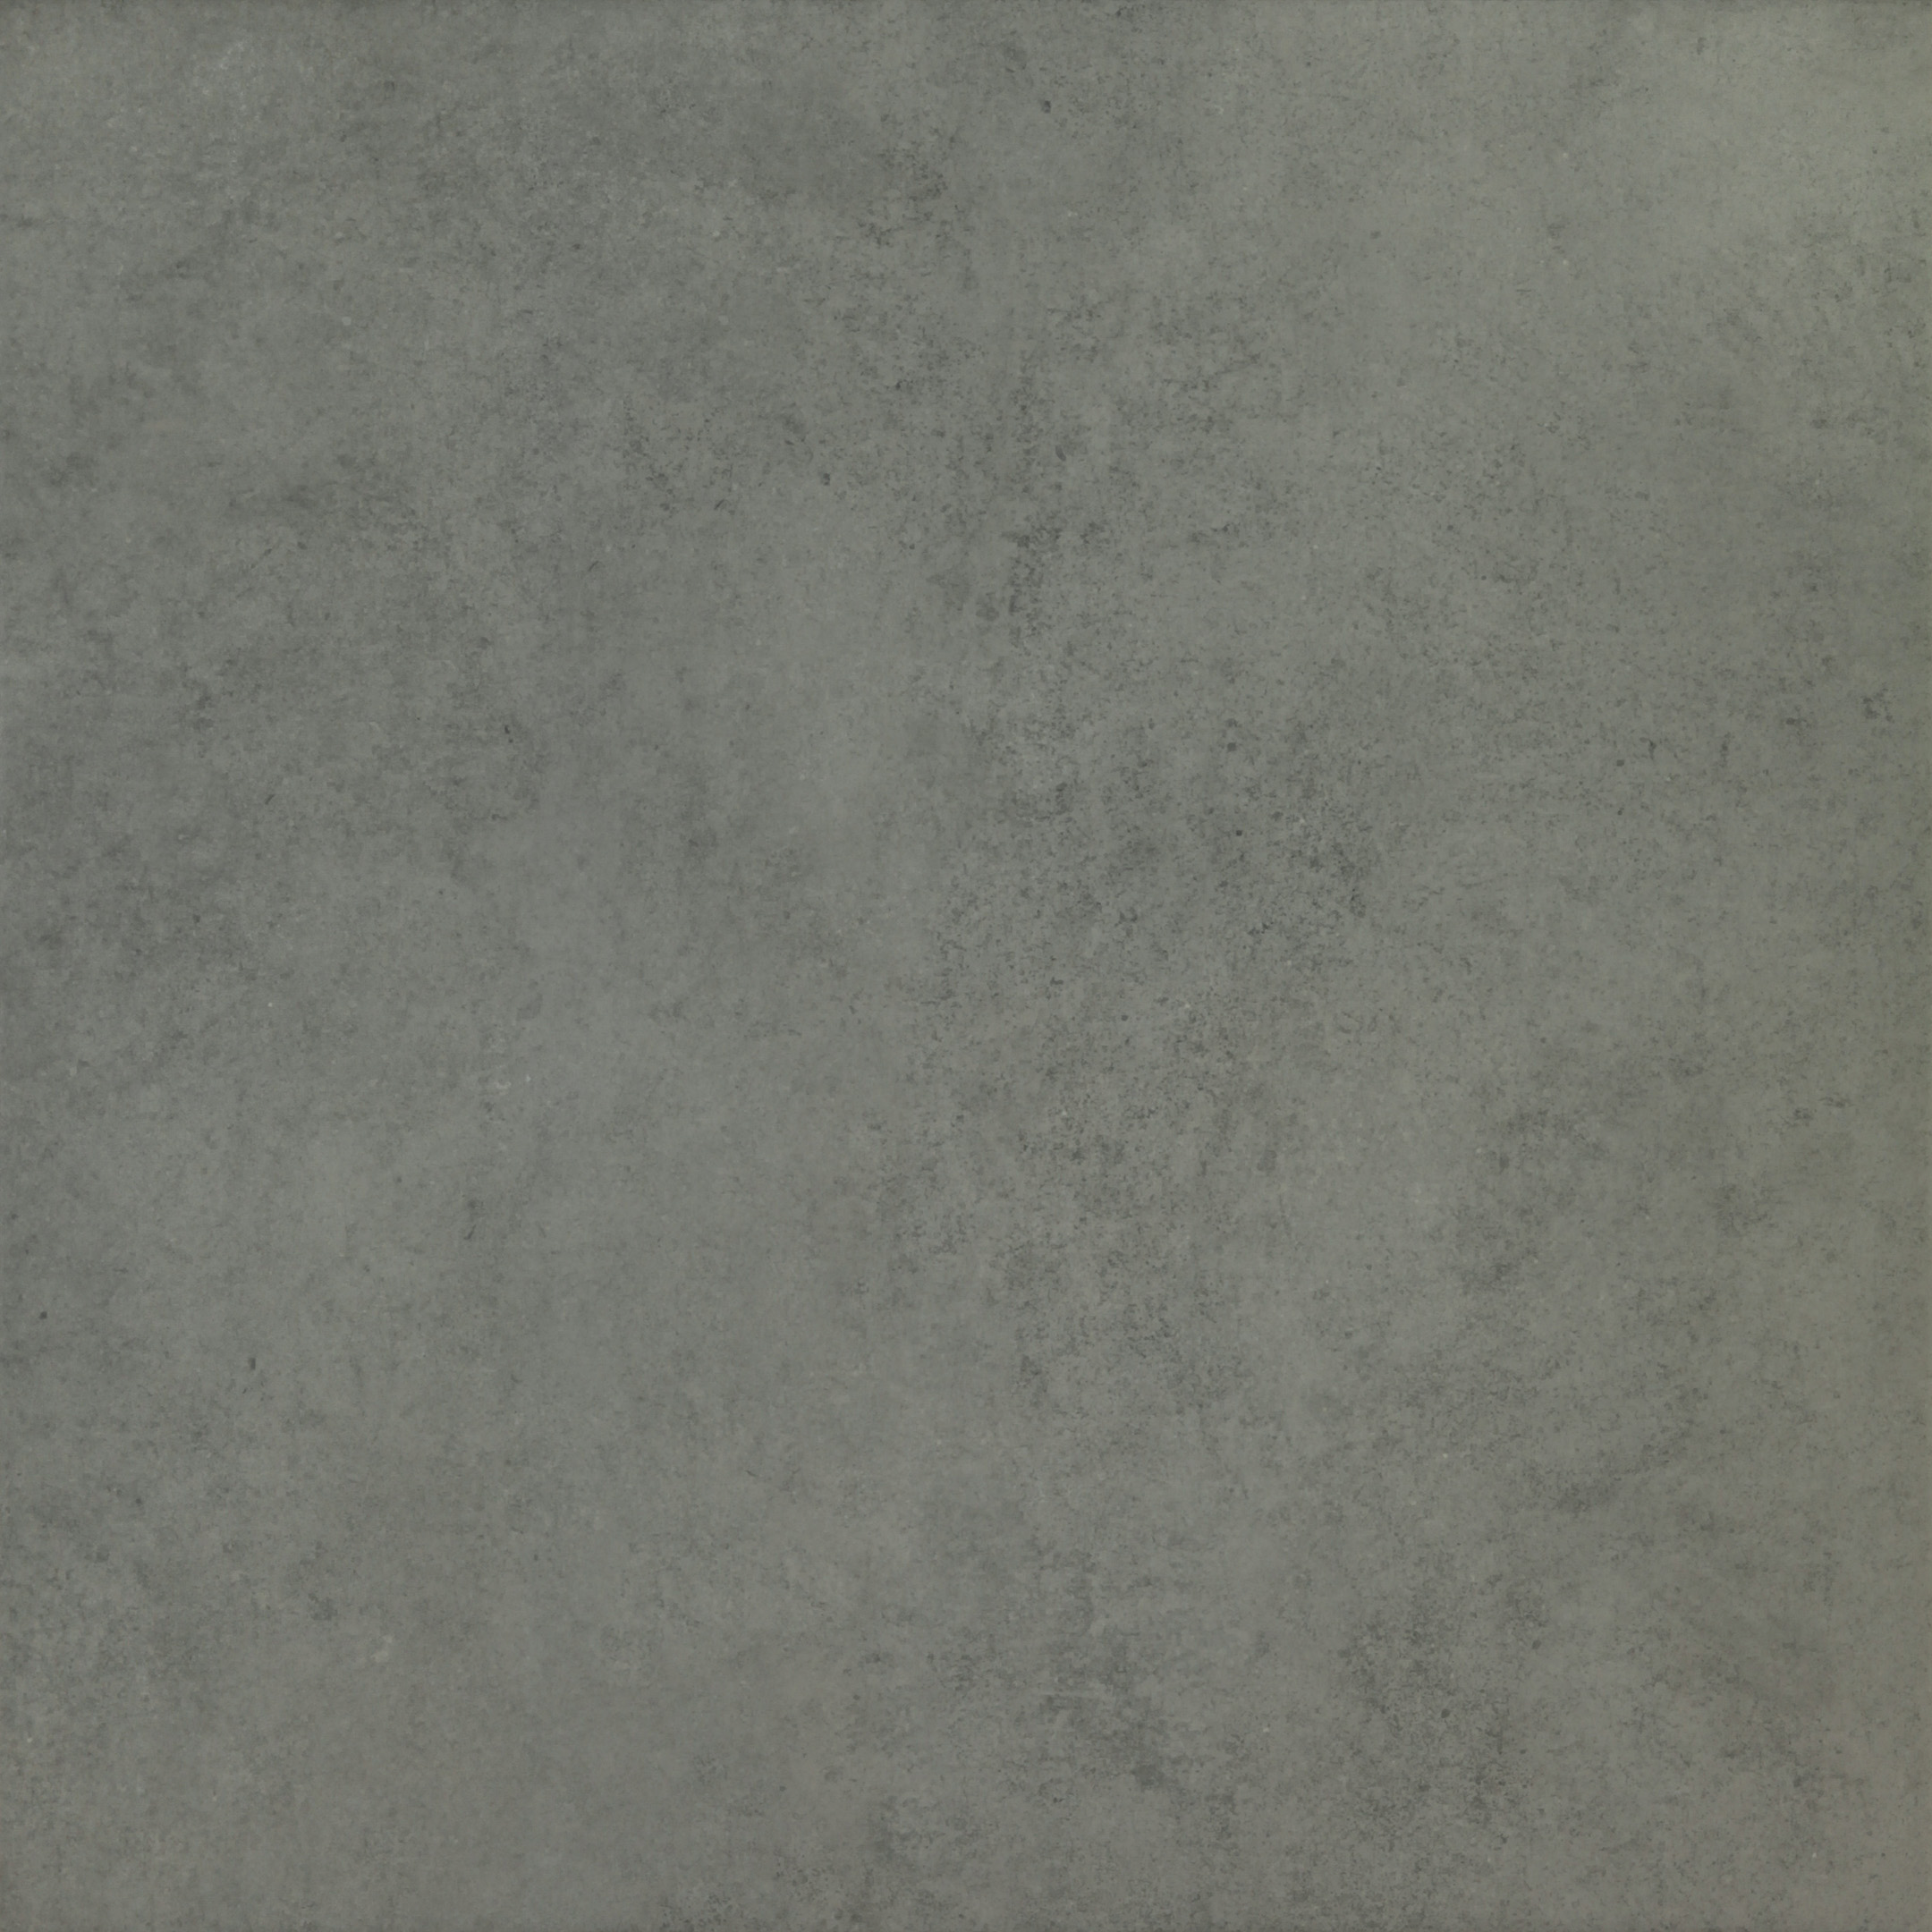 фото Керамогранит уг гранитея таганай серый g343 матовый 600х600х10 мм (4 шт.=1,44 кв.м)